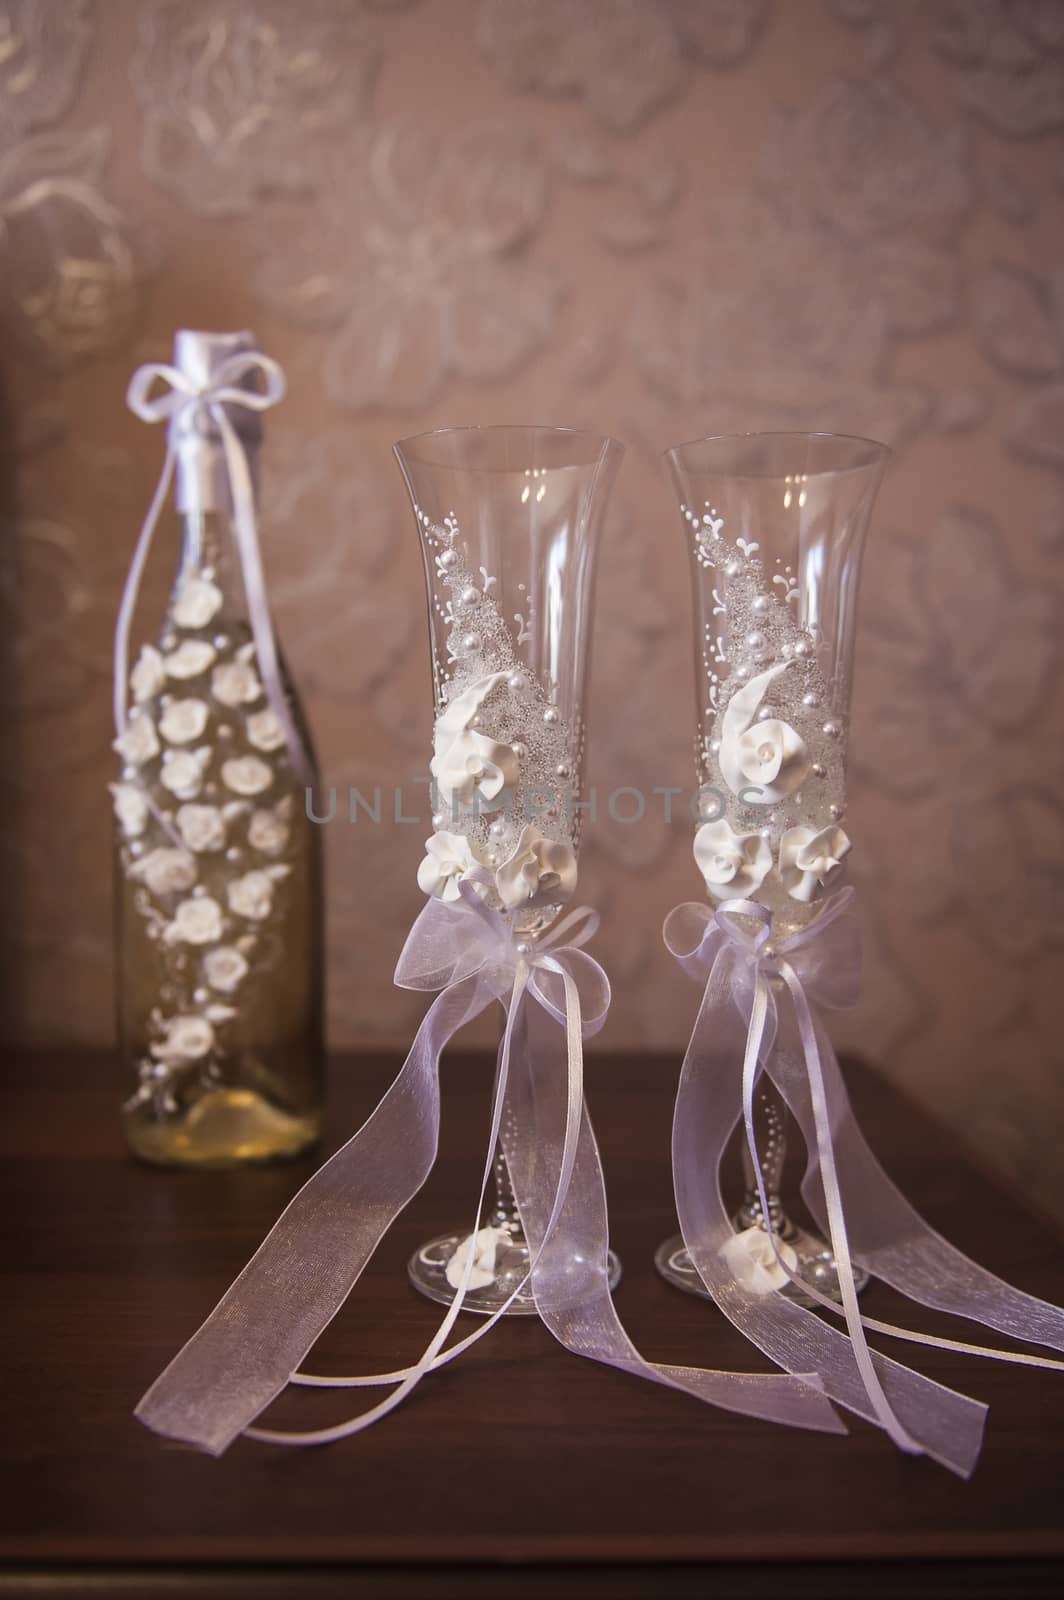 Two wedding glasses